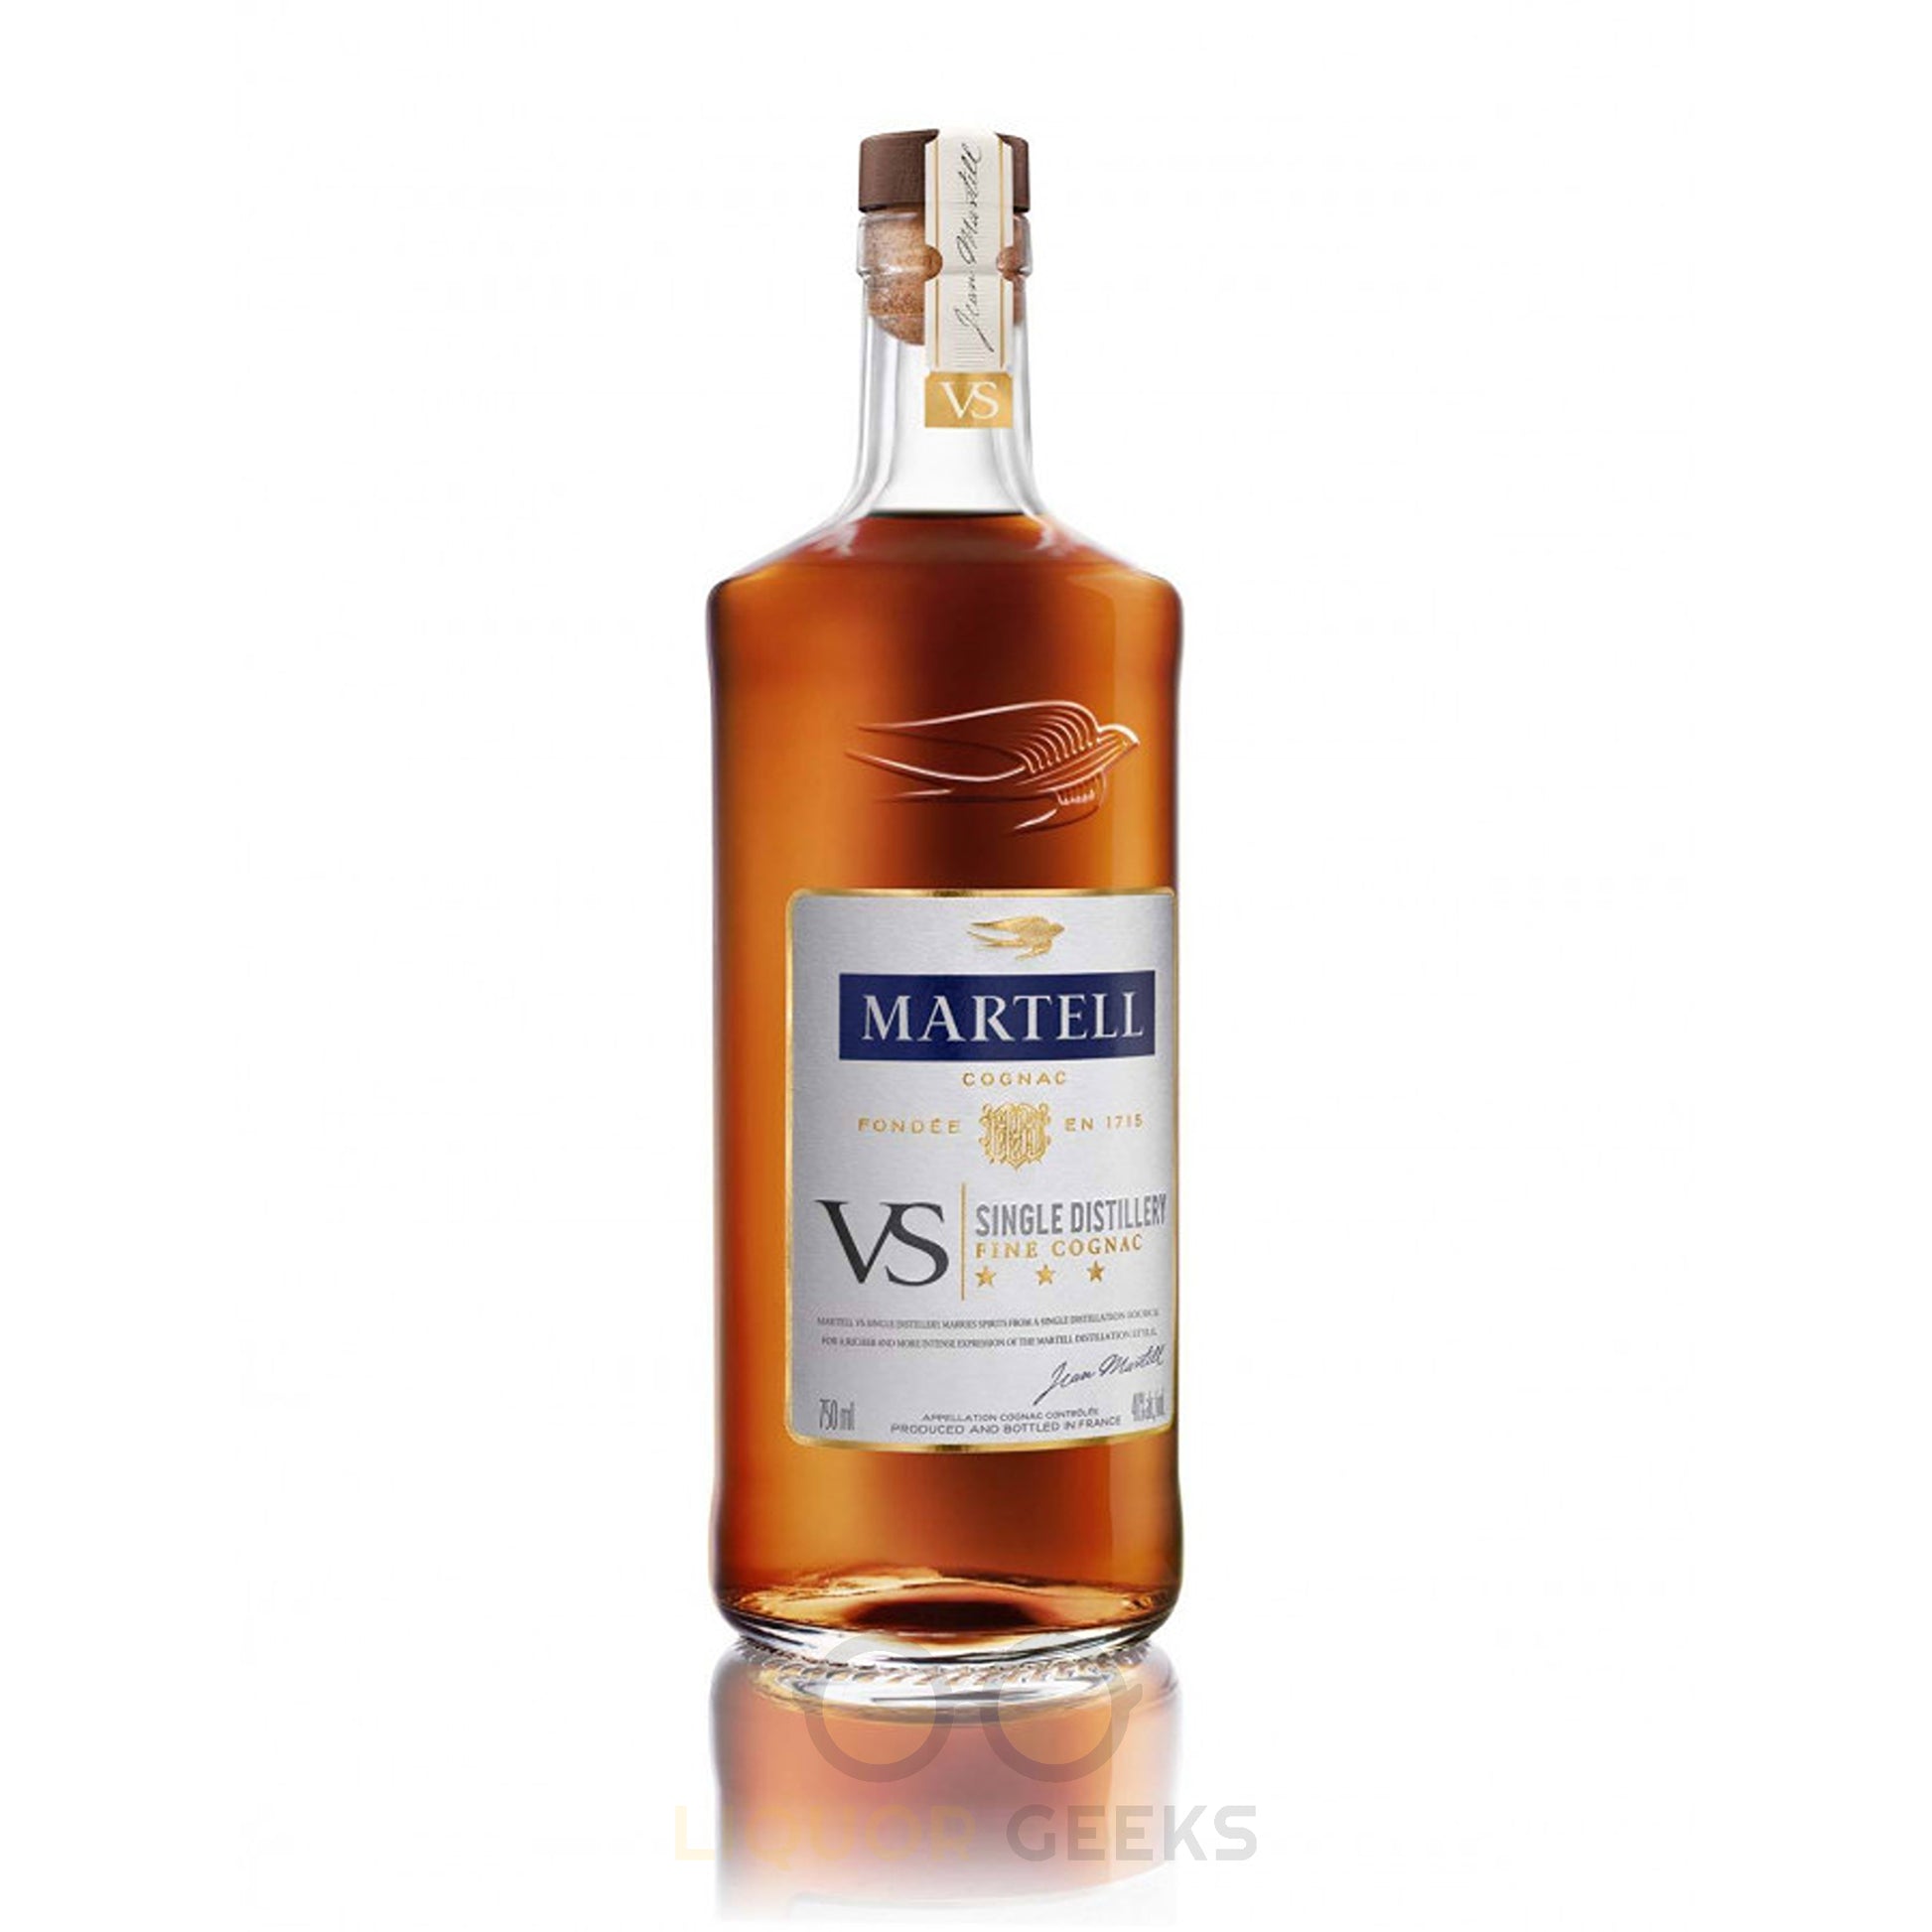 Martell VS Cognac - Liquor Geeks